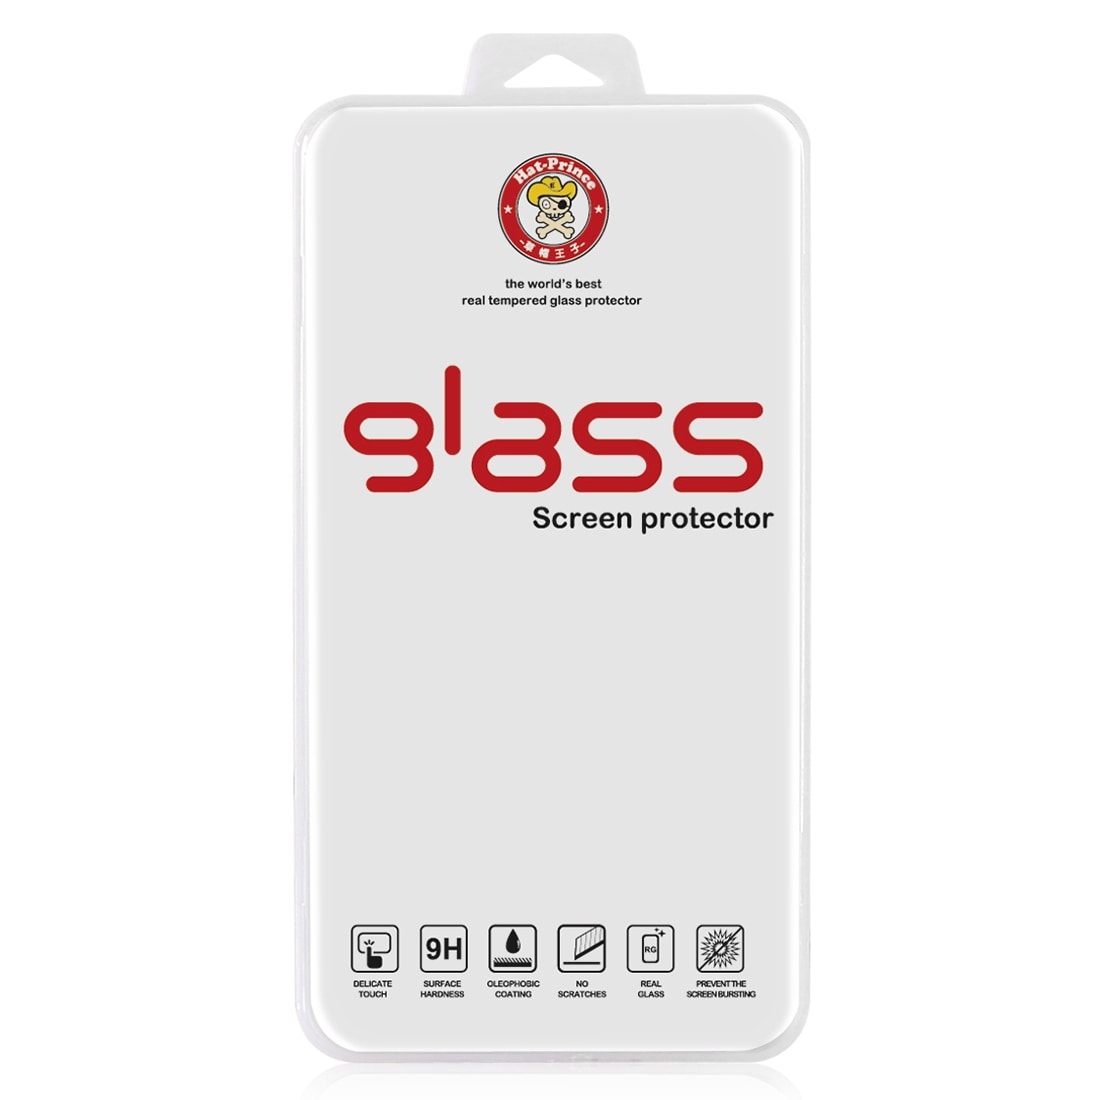 Herdet Glassbeskyttelse iPhone 7 Plus - Bøyd Rose Gull